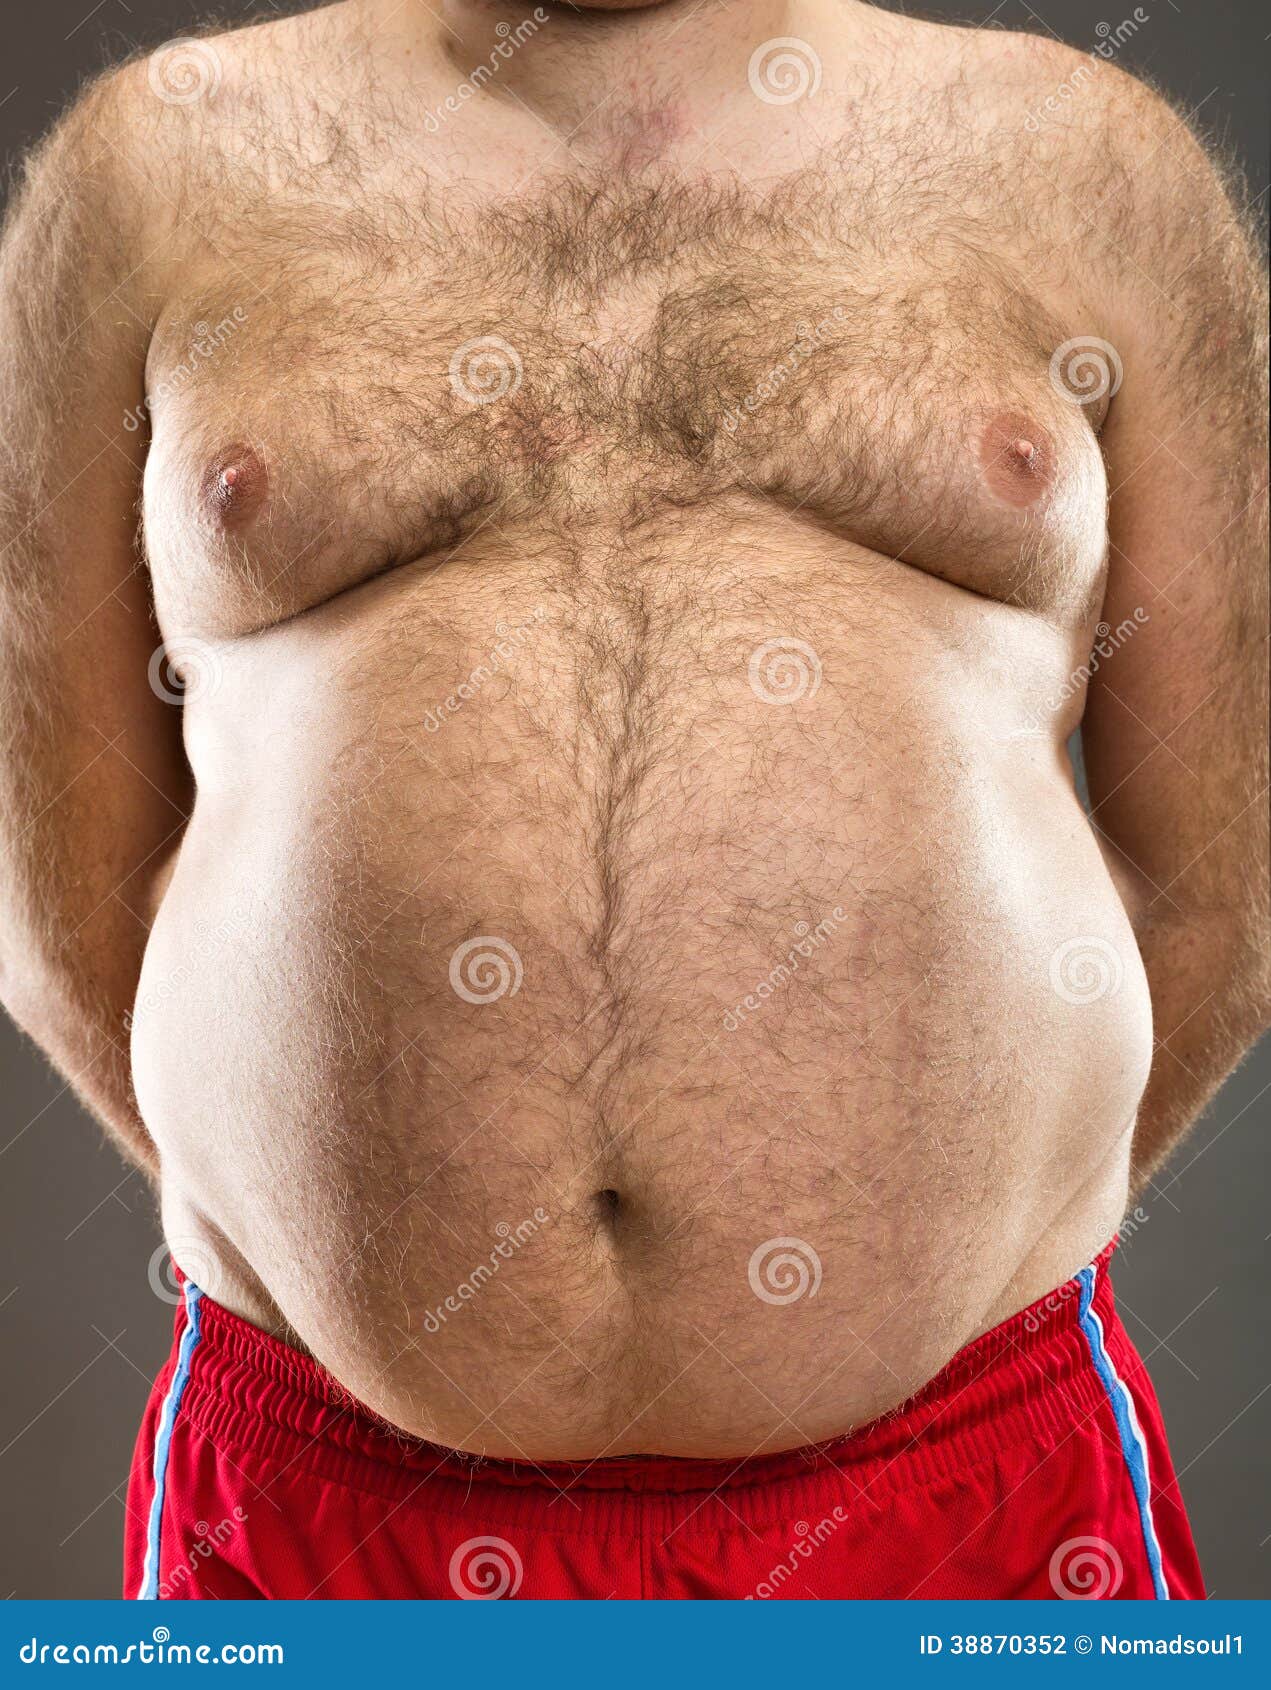 Best of Fat guy nude